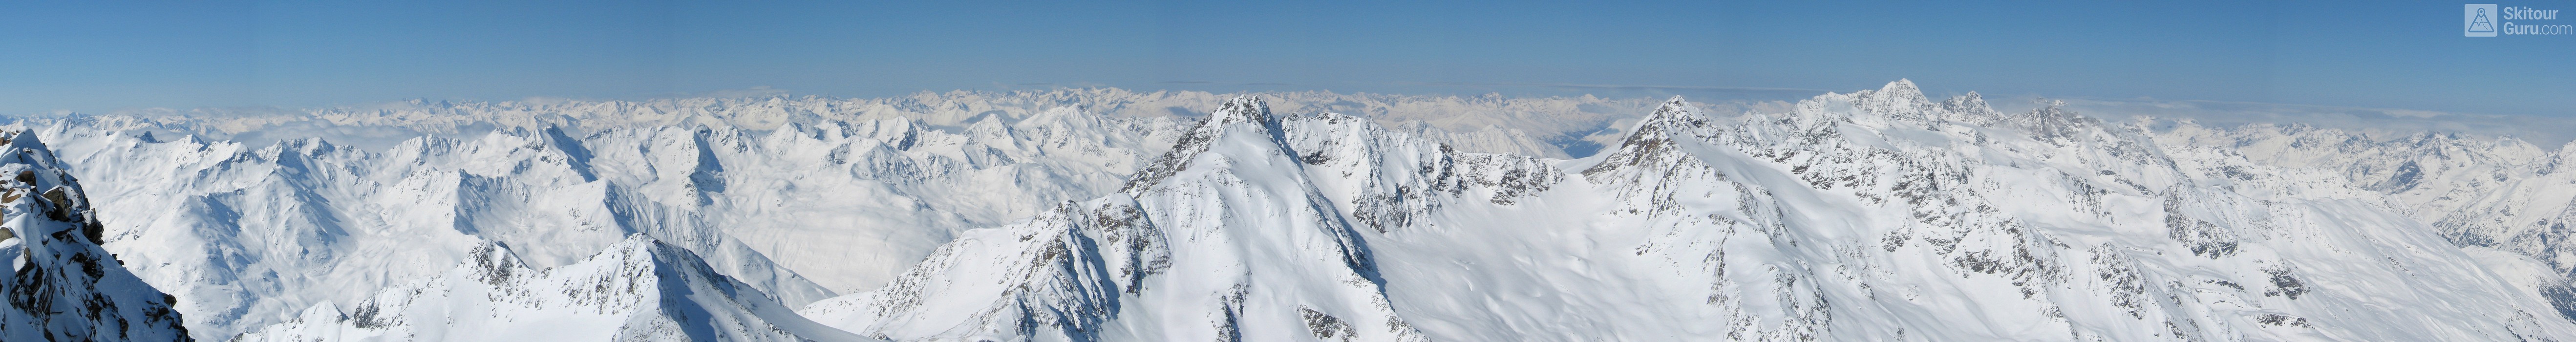 Wildspize W - Vernagt Hütte Ötztaler Alpen / Alpi Venoste Rakousko panorama 31